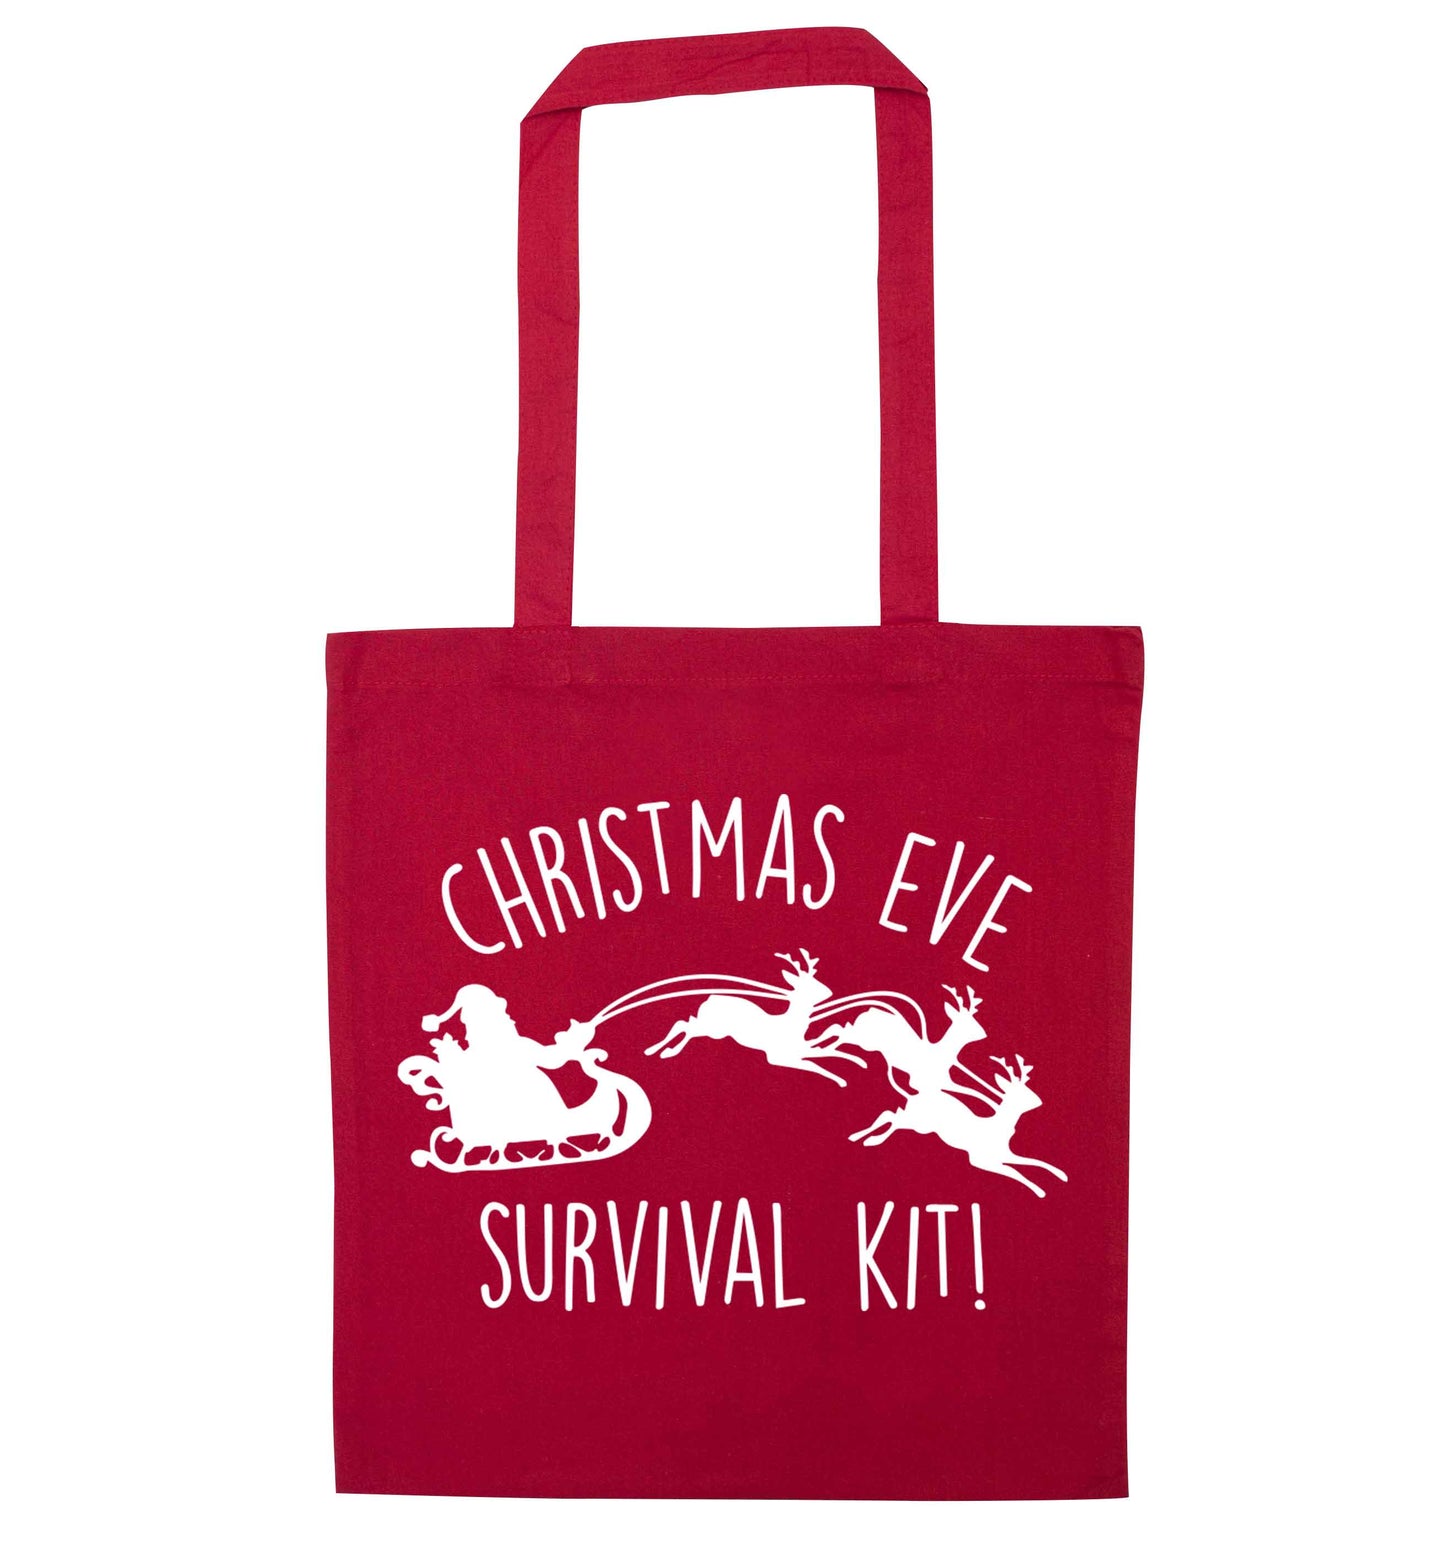 Christmas Day Survival Kitred tote bag